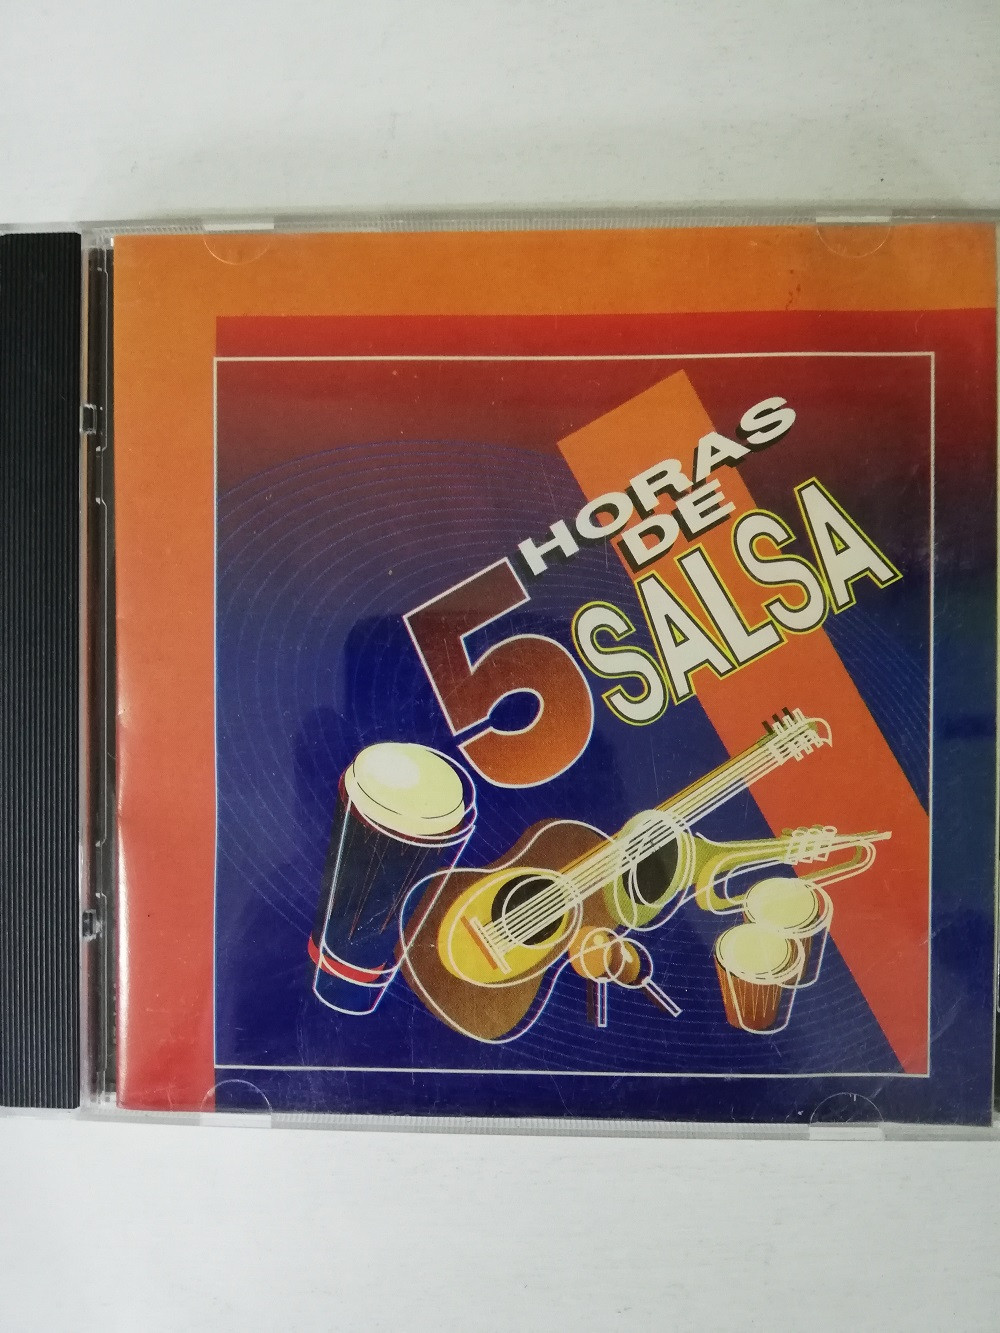 Imagen CD 5 HORAS DE SALSA VOL. 2 - SALSA DE LOS 80´s 1